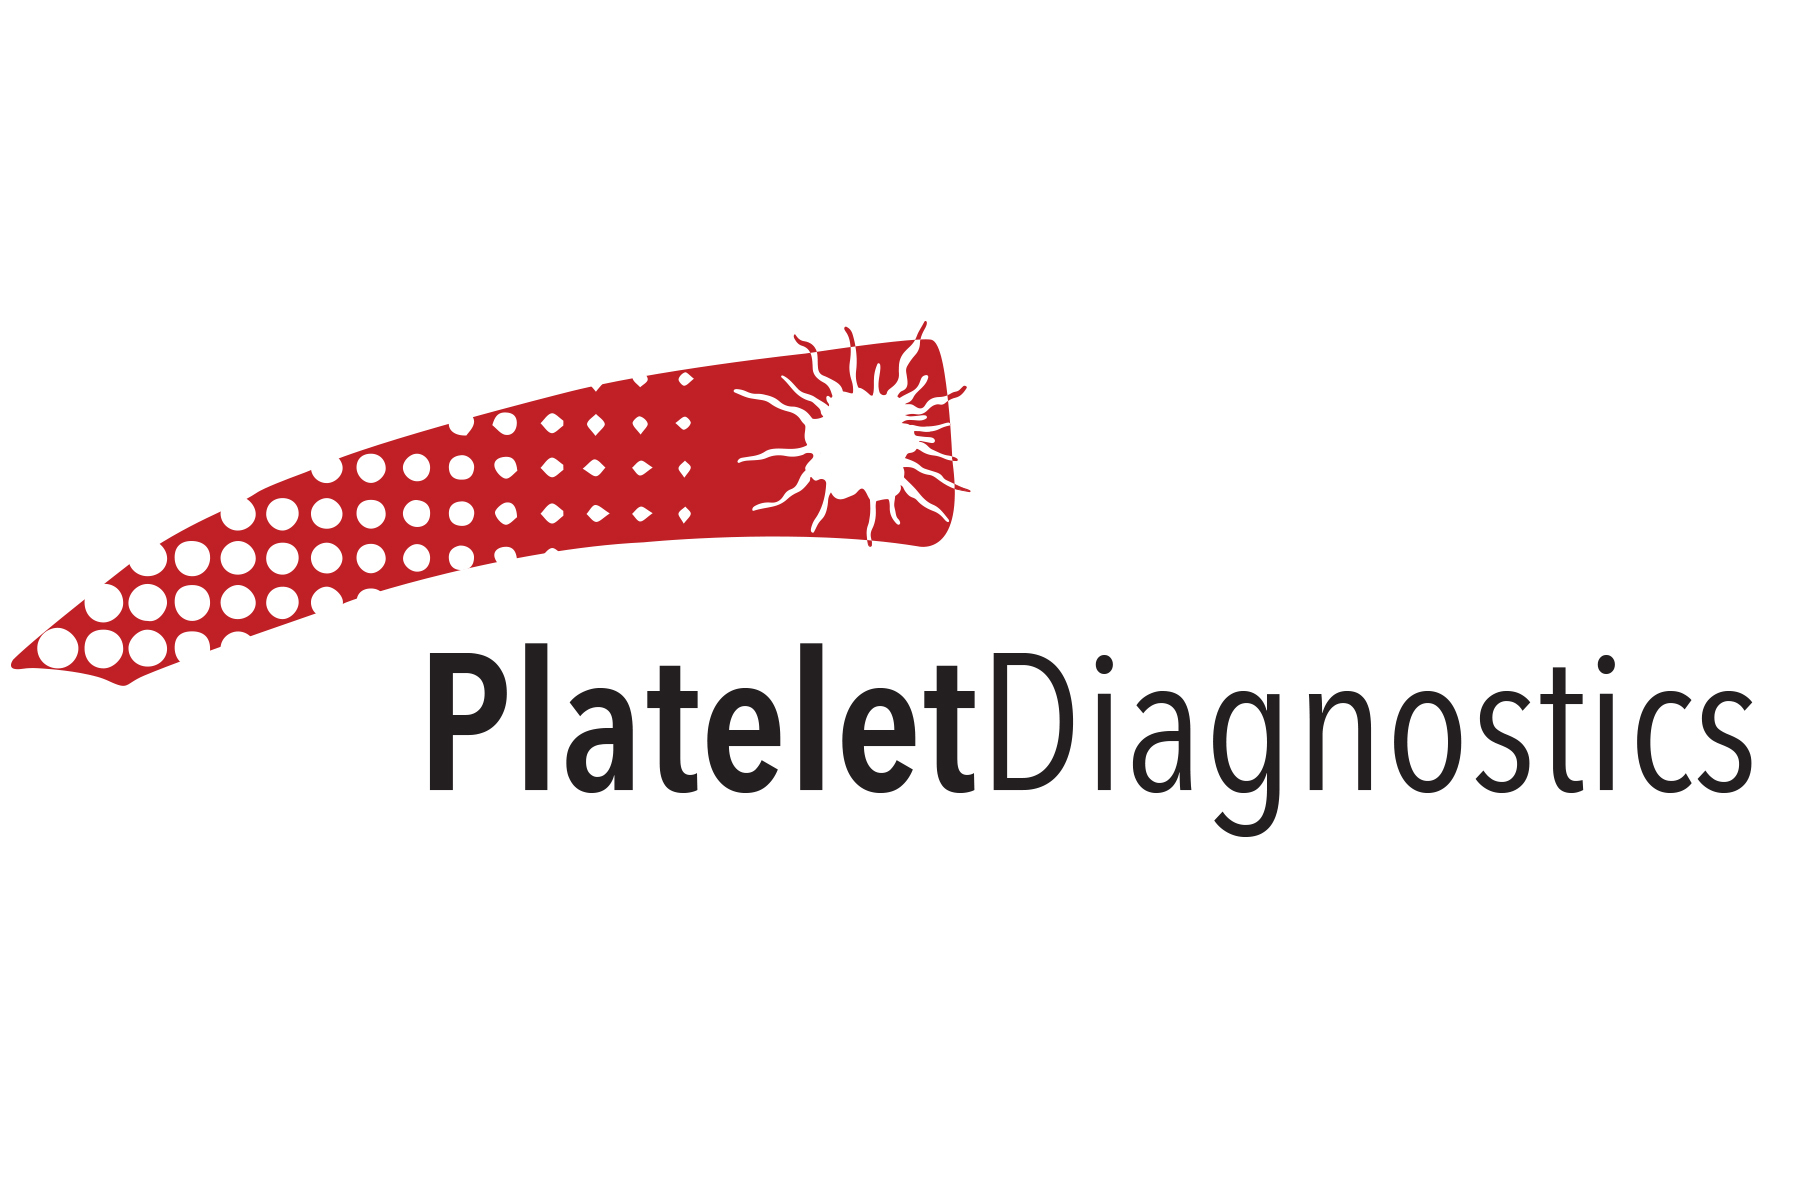 Plateletdiagnosticslogo